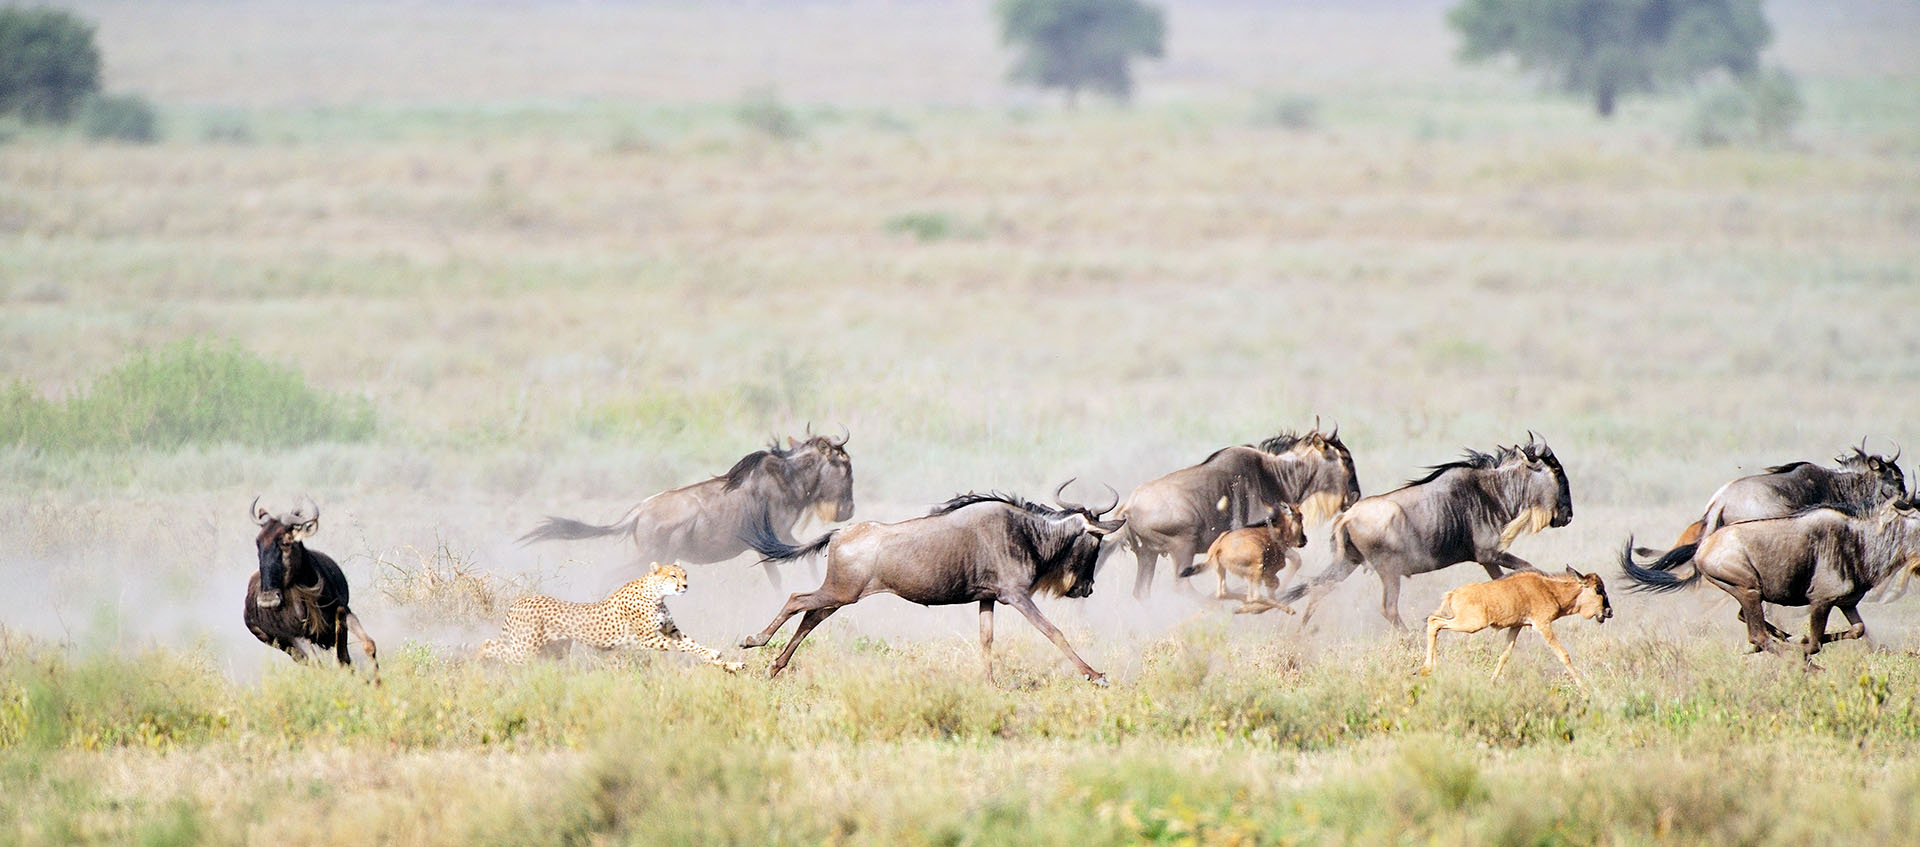 Cheetah hunting wildebeest